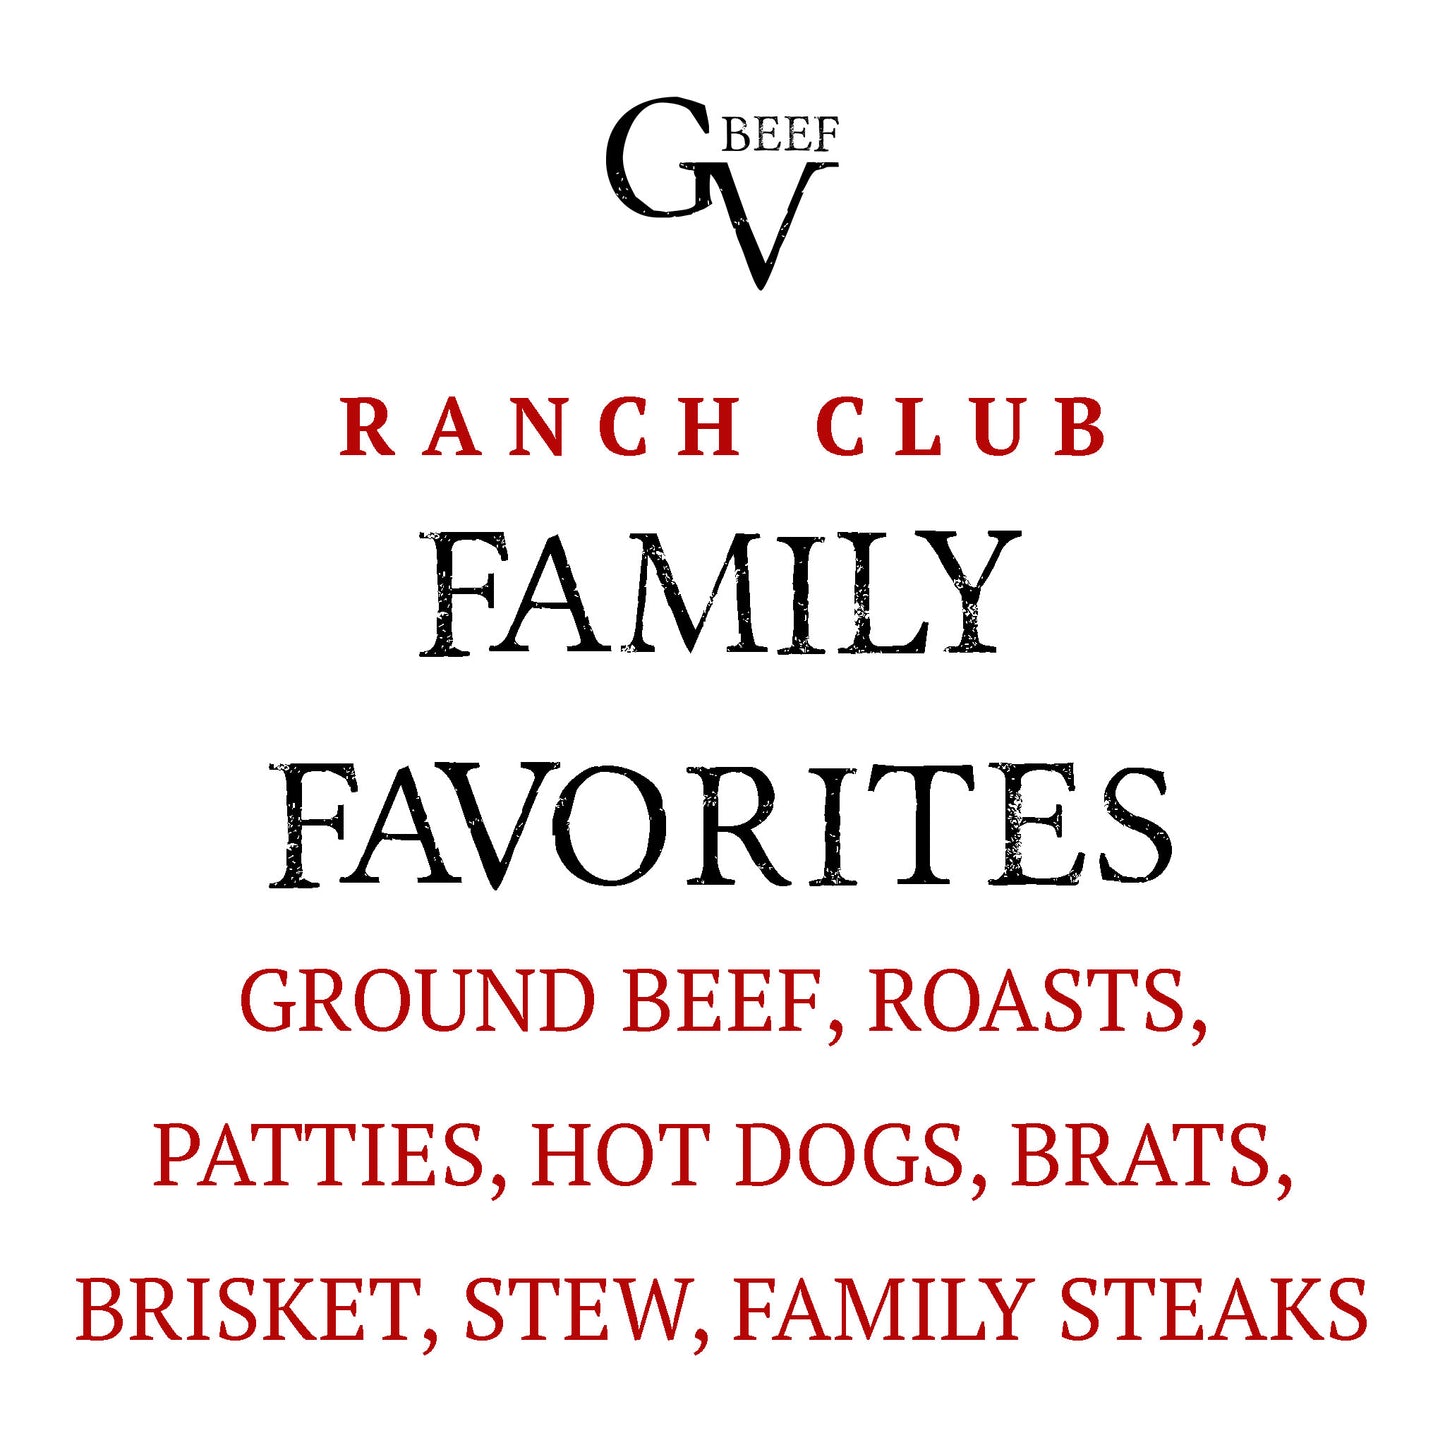 Family Favorites - Ranch Club